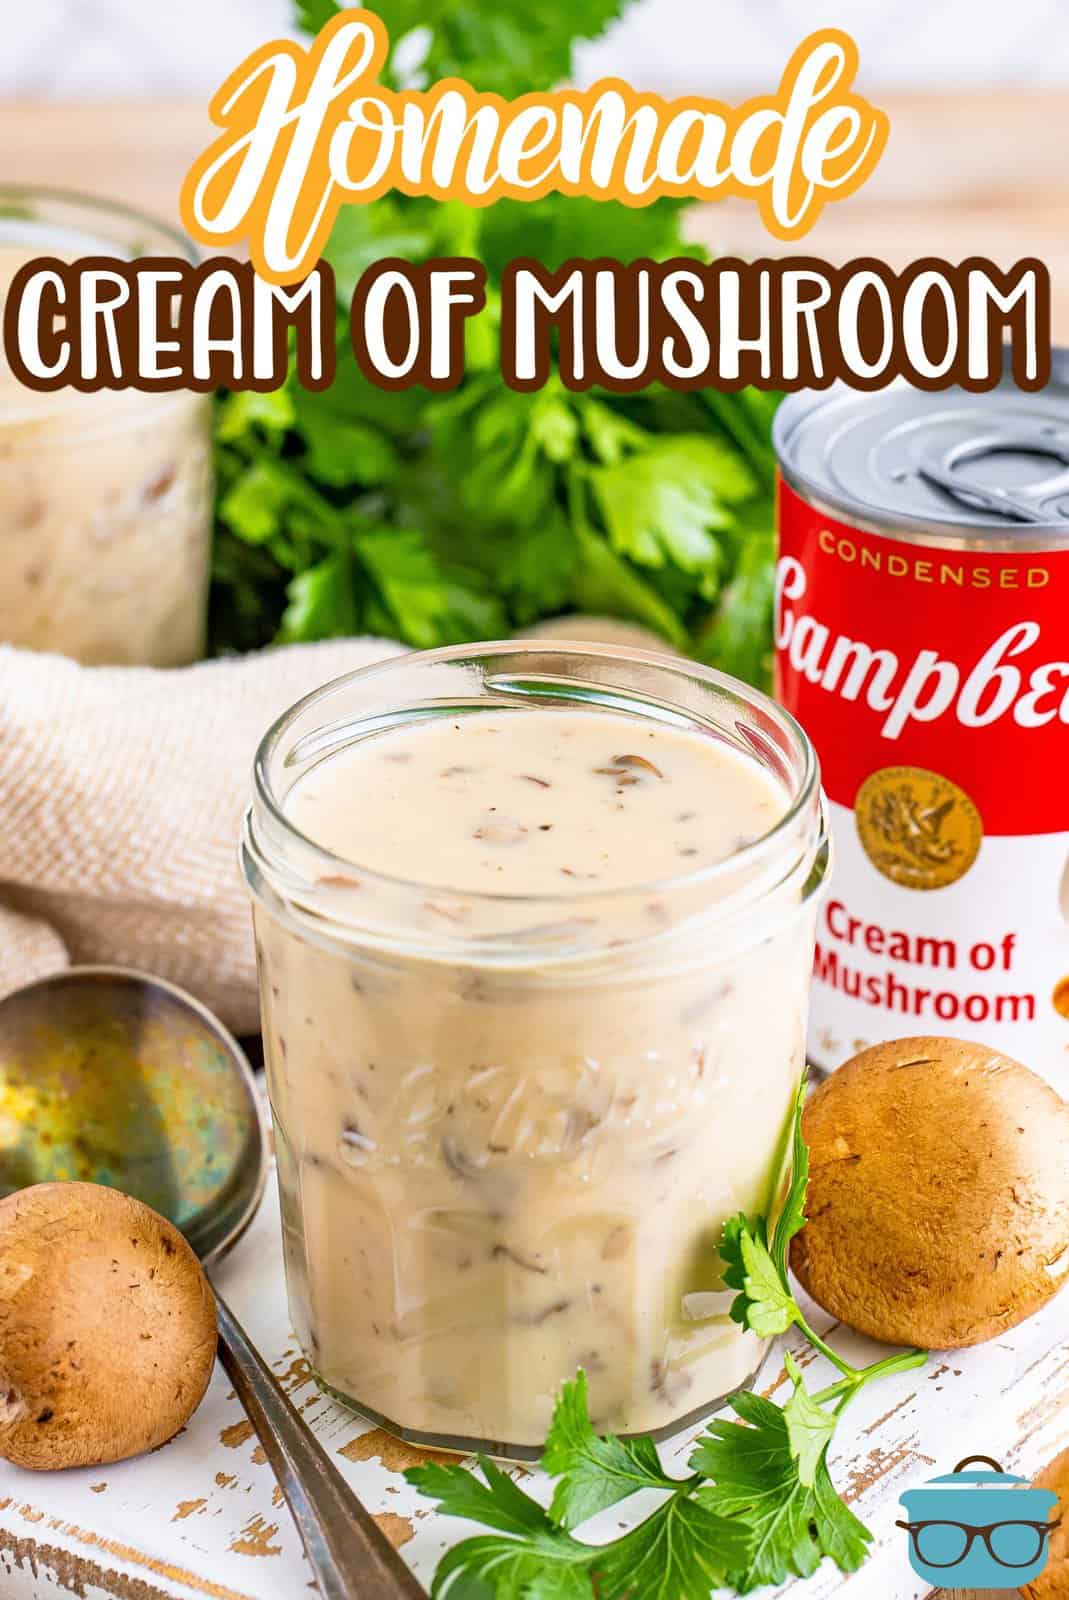 A jar of Cream of Mushroom condensed soup.